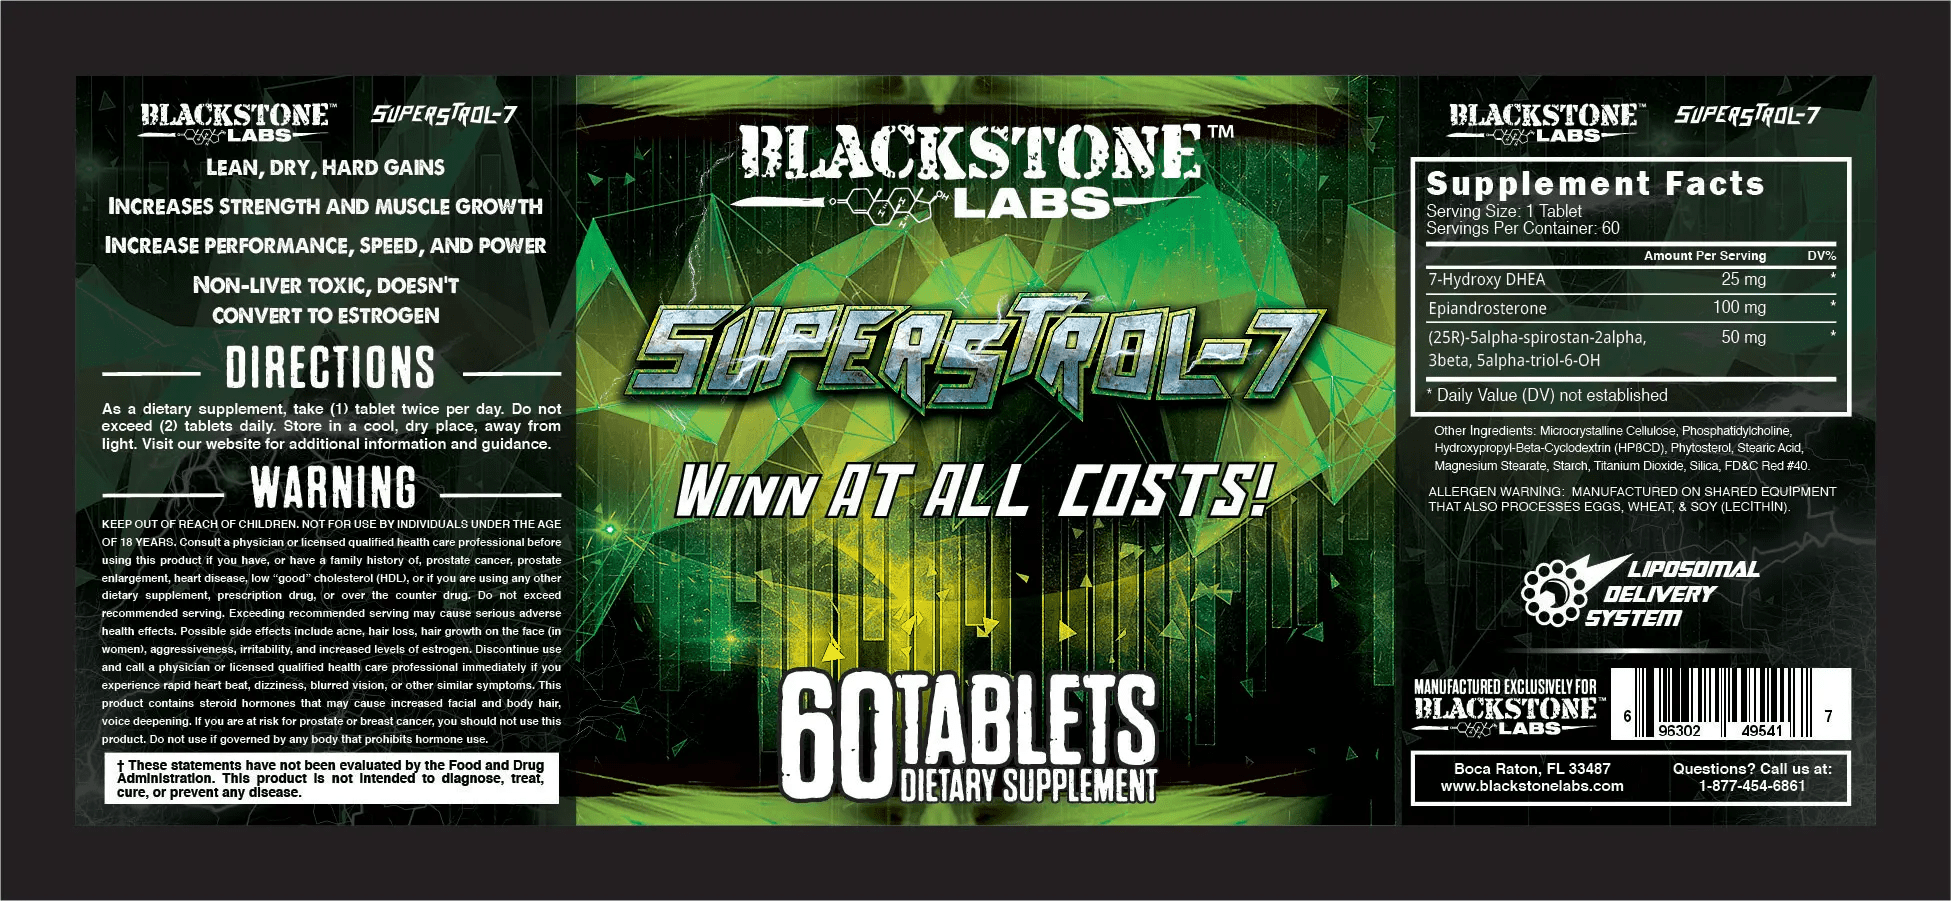 Blackstone labs  SuperStrol7 60 шт. / 60 servings,  мл, Blackstone Labs. Спец препараты